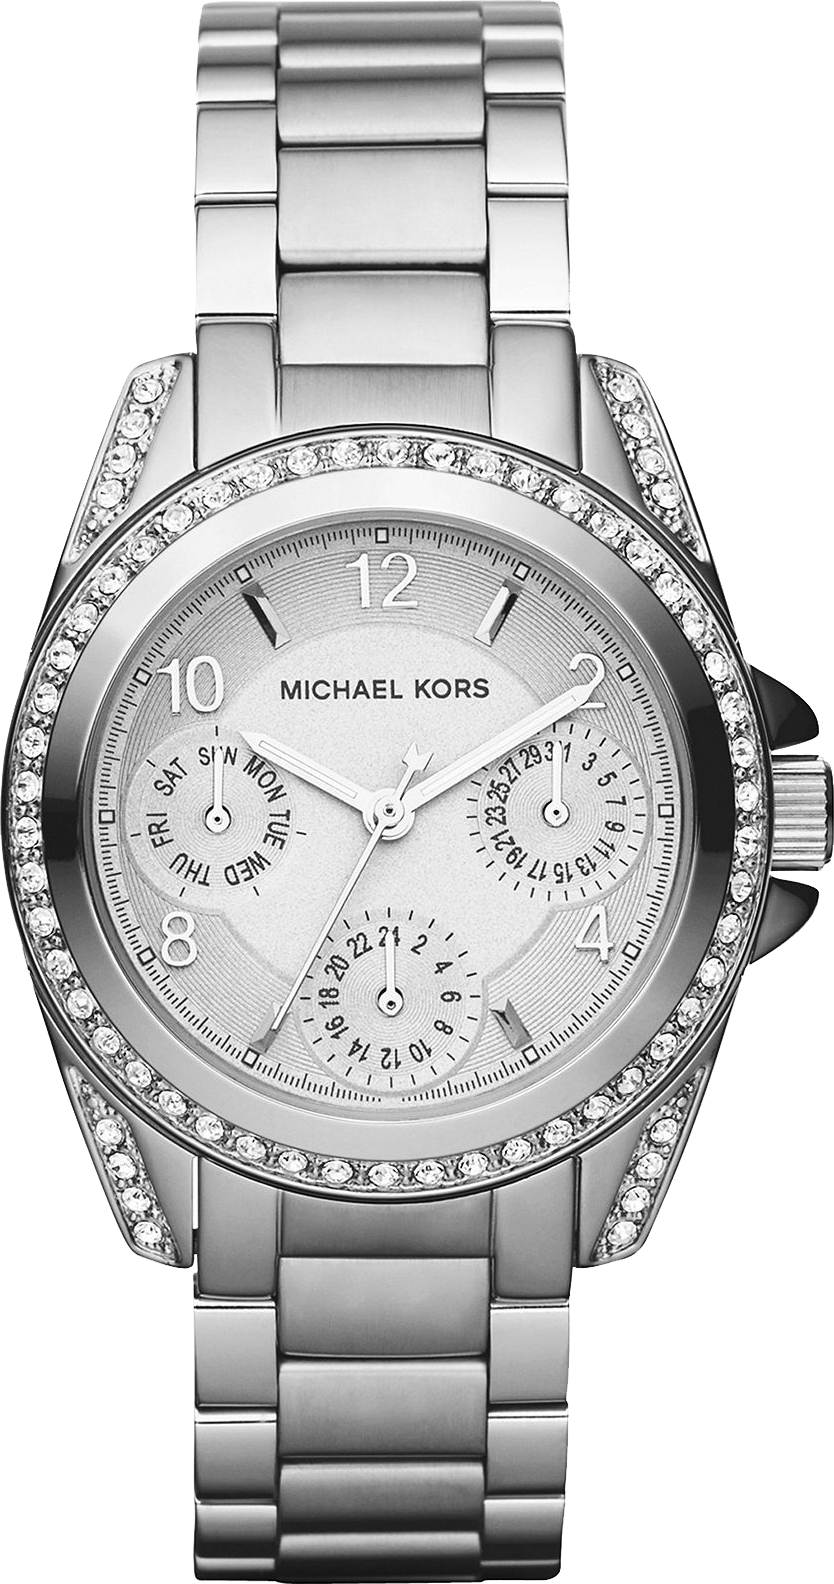 Amazoncom Michael Kors Womens Parker SilverTone Watch MK5353  Michael  Kors Clothing Shoes  Jewelry